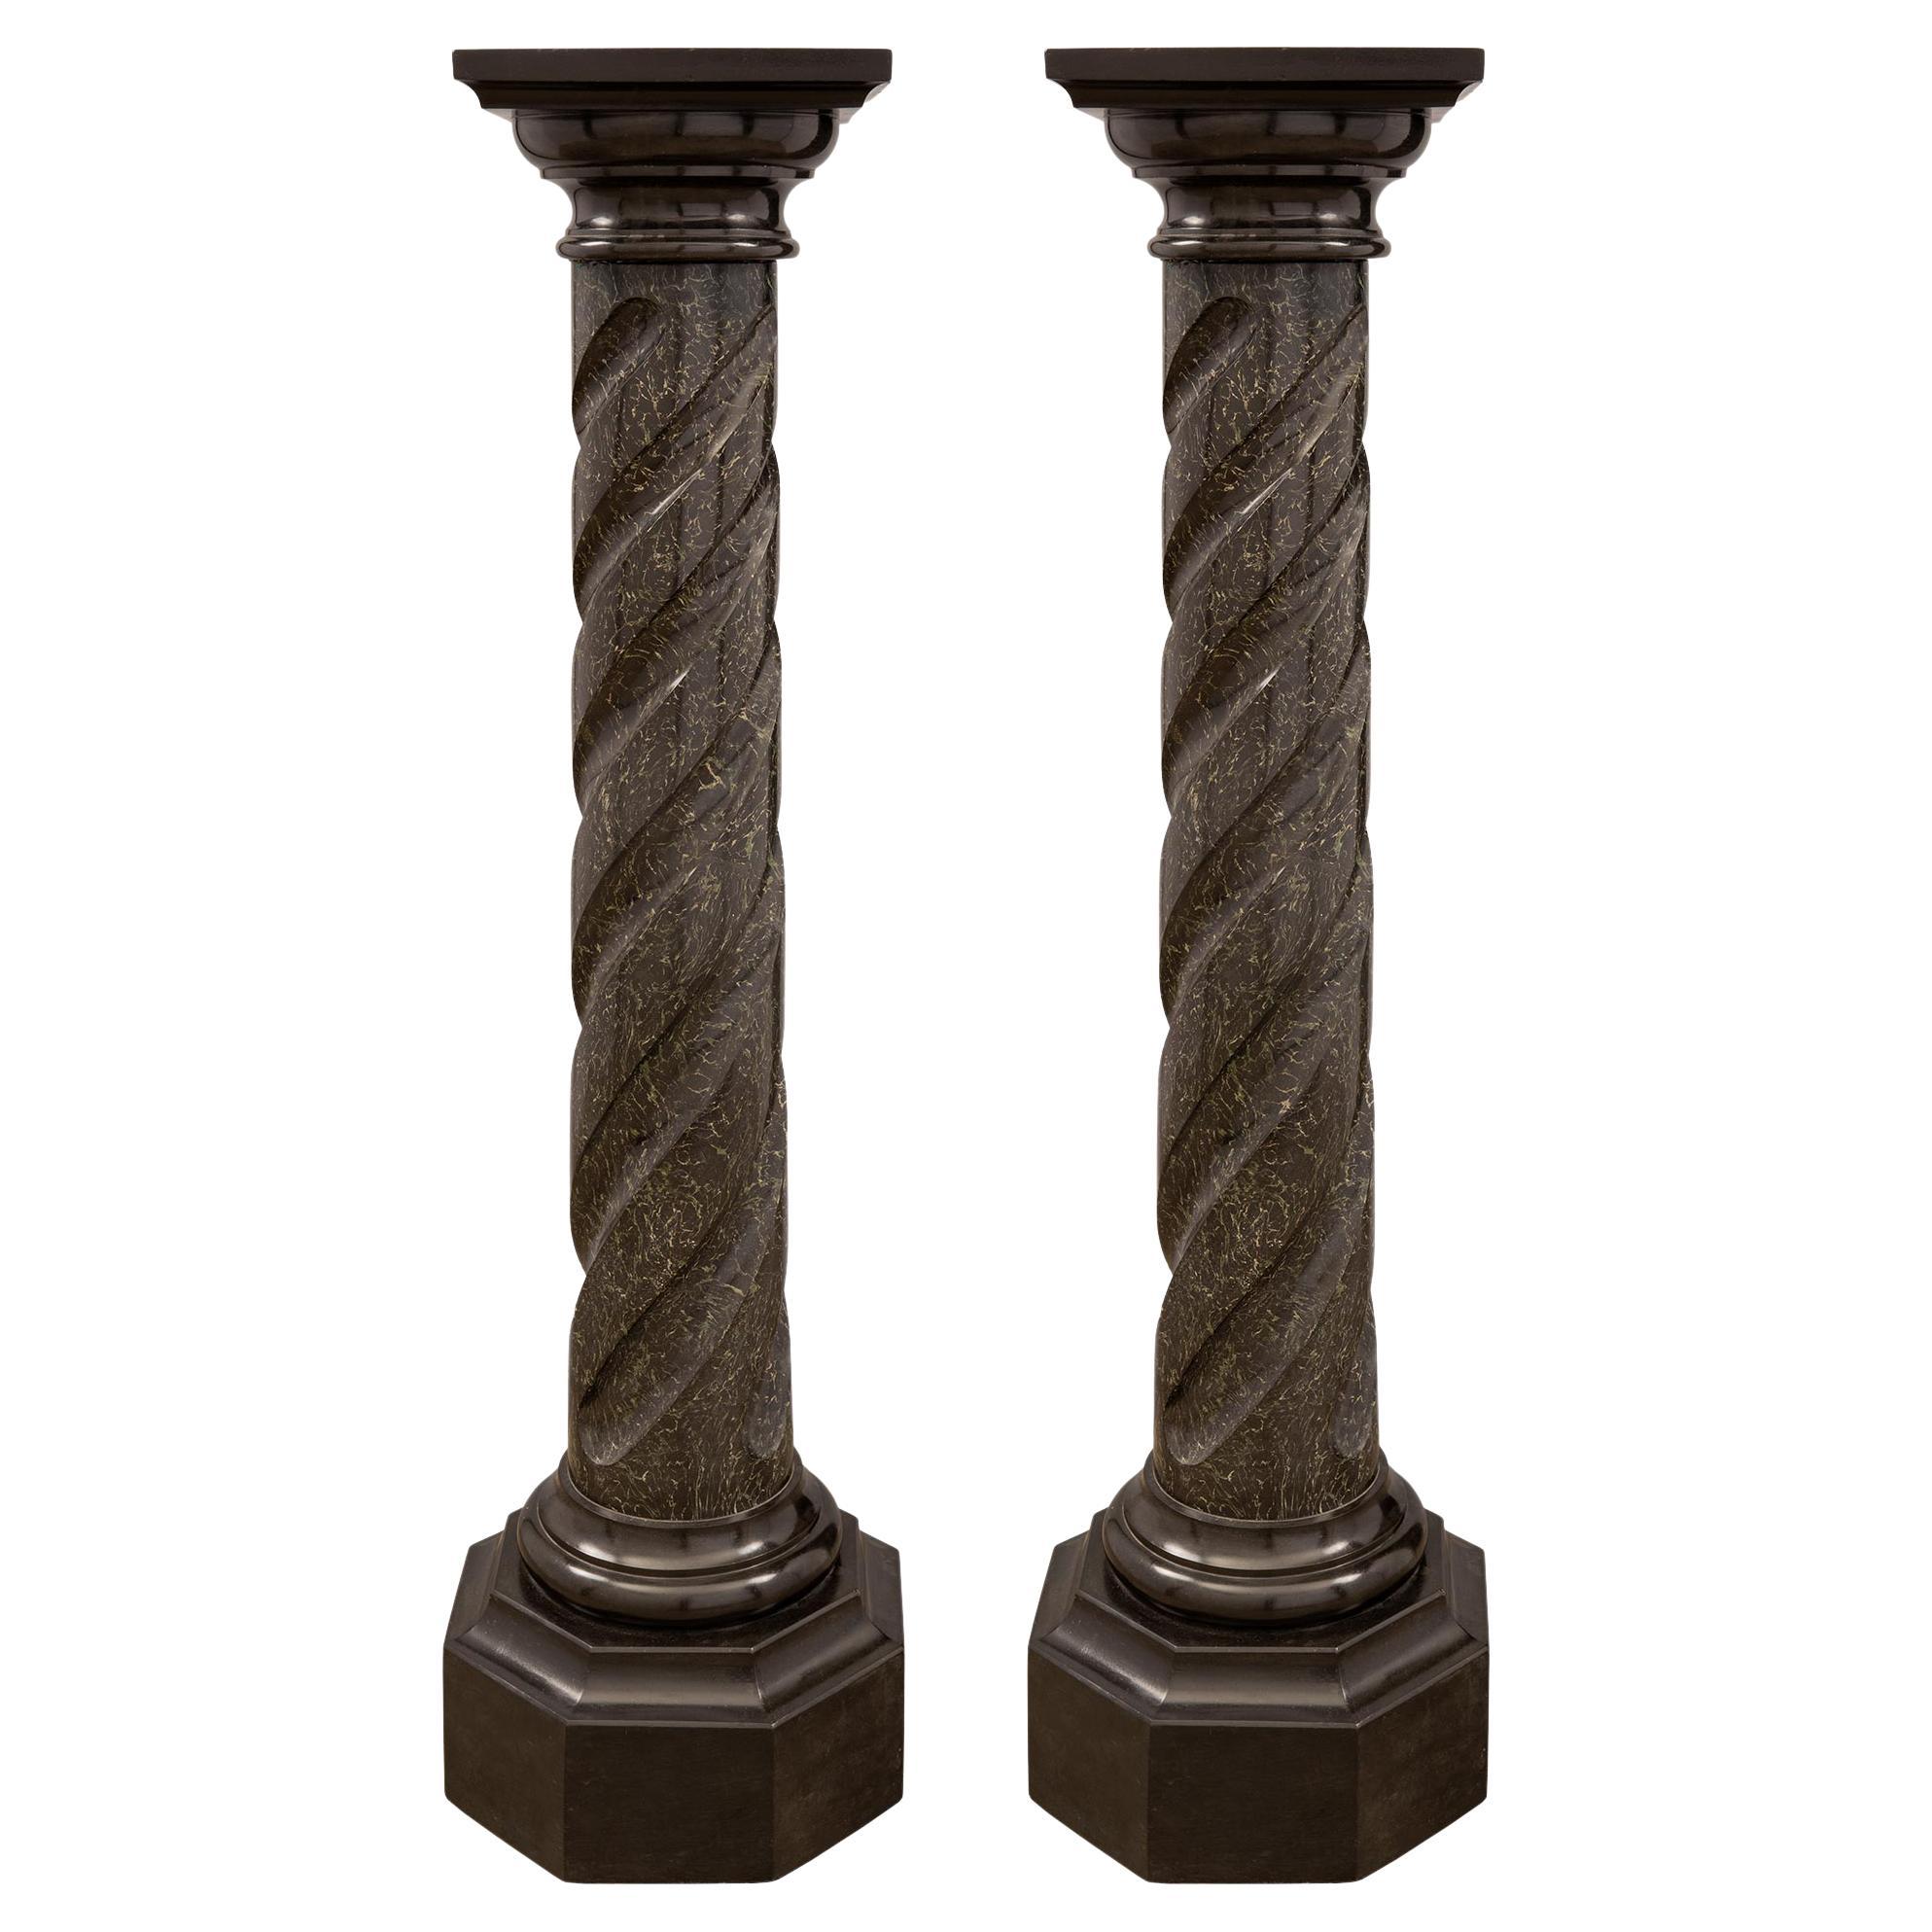 Pair of Italian 19th Century Scagliola and Black Belgian Marble Columns